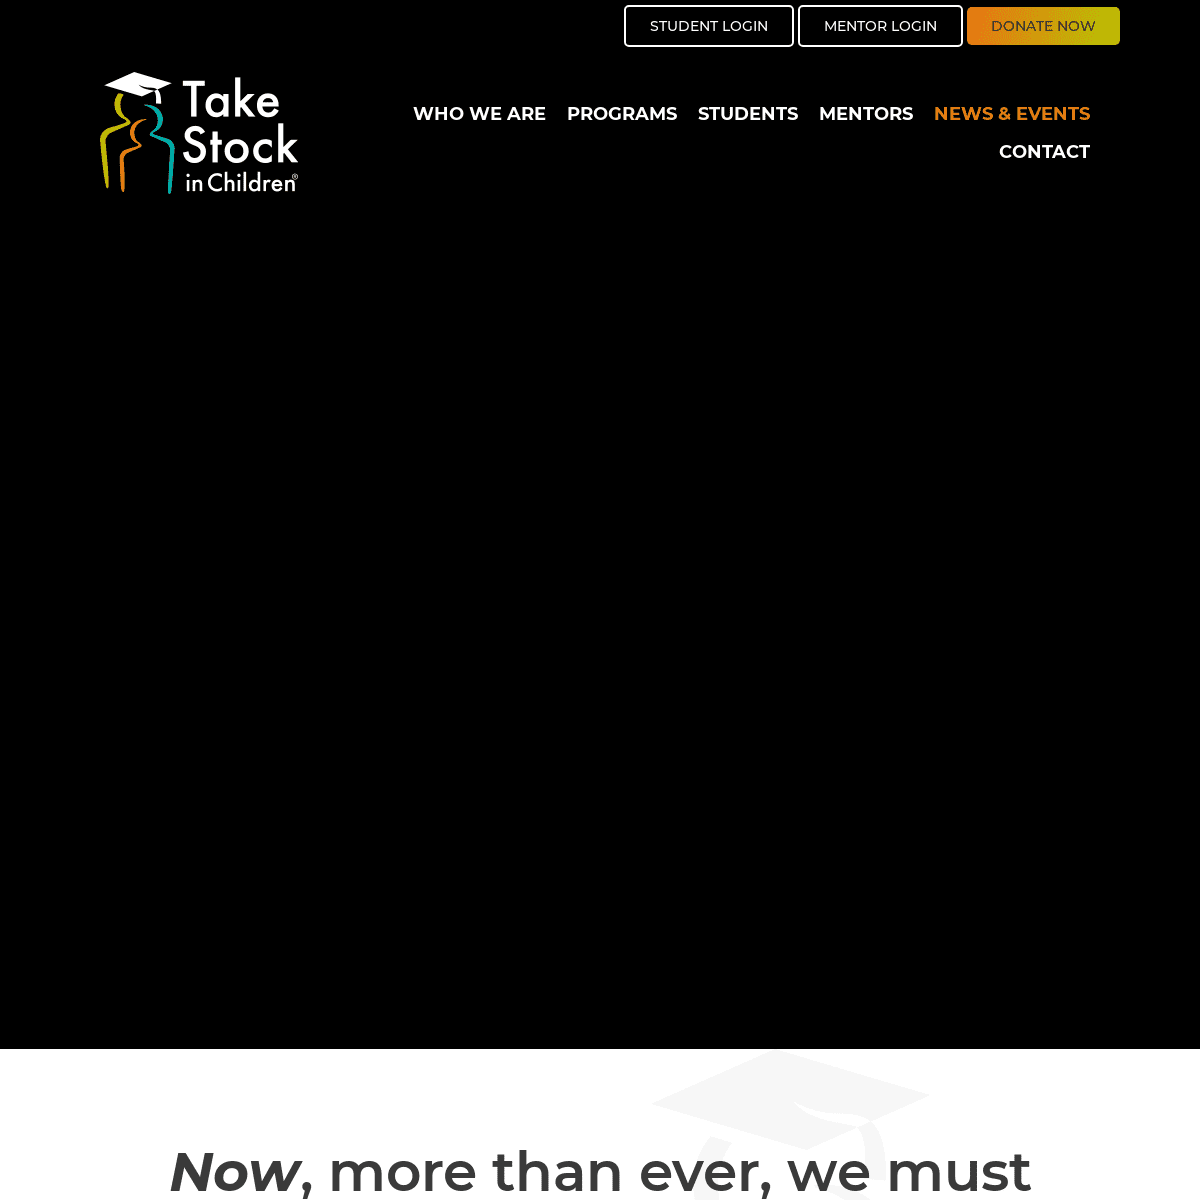 A complete backup of https://takestockinchildren.org